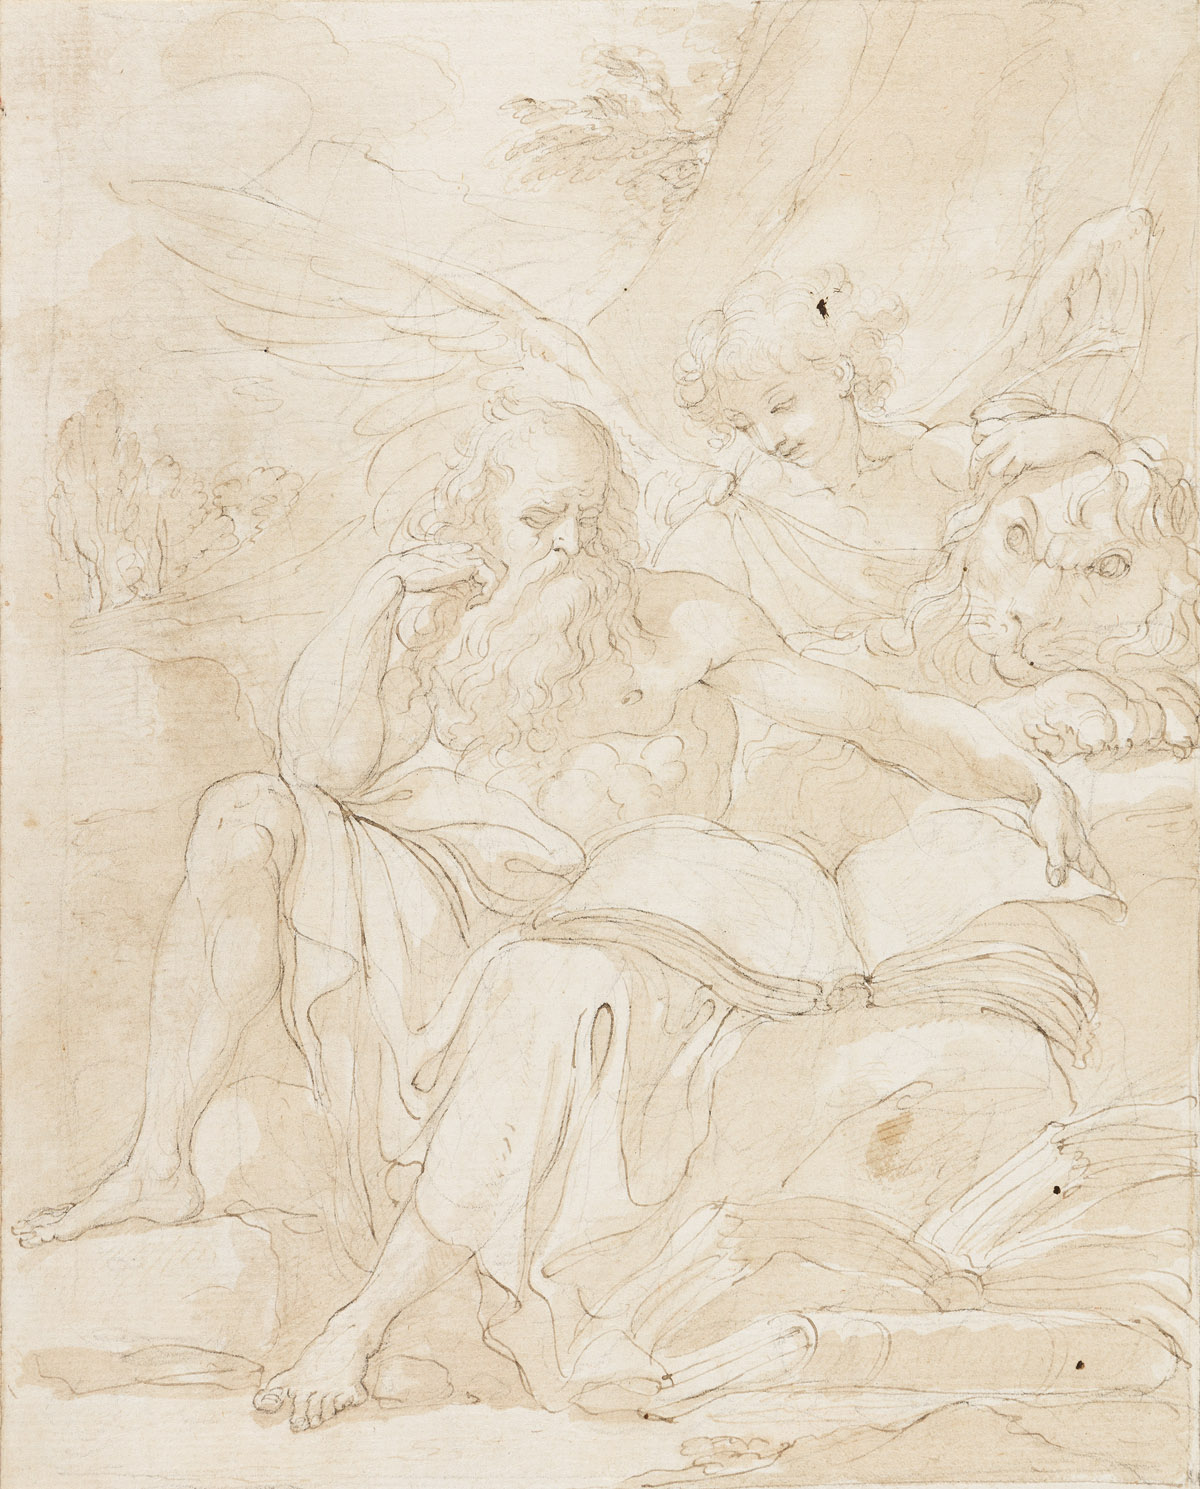 UBALDO GANDOLFI (Bologna 1728-1781 Ravenna) Saint Mark Contemplating the Gospel with an Angel.